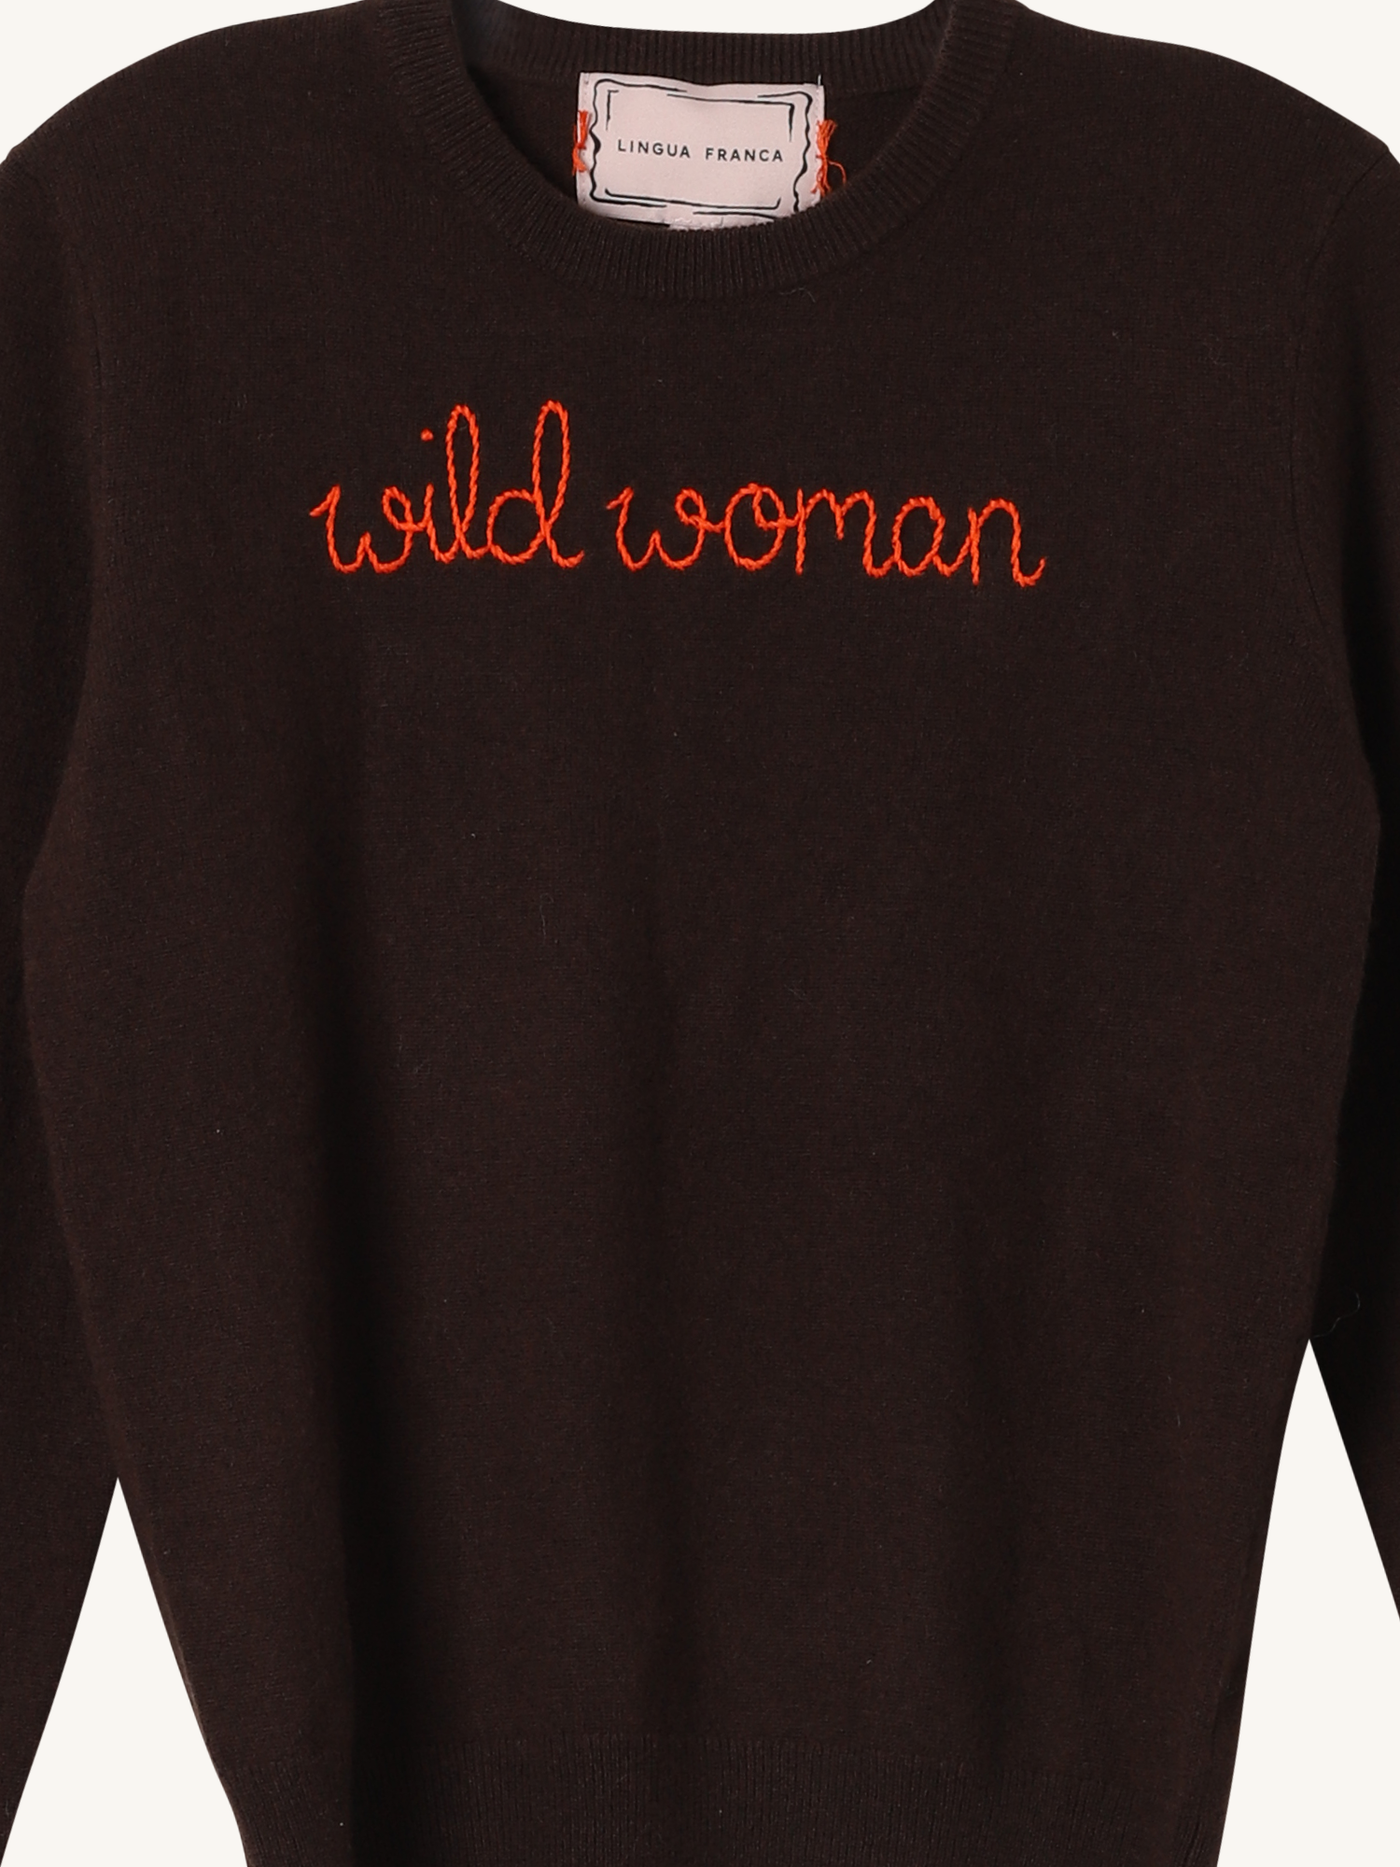 Wild Woman Crewneck Sweater